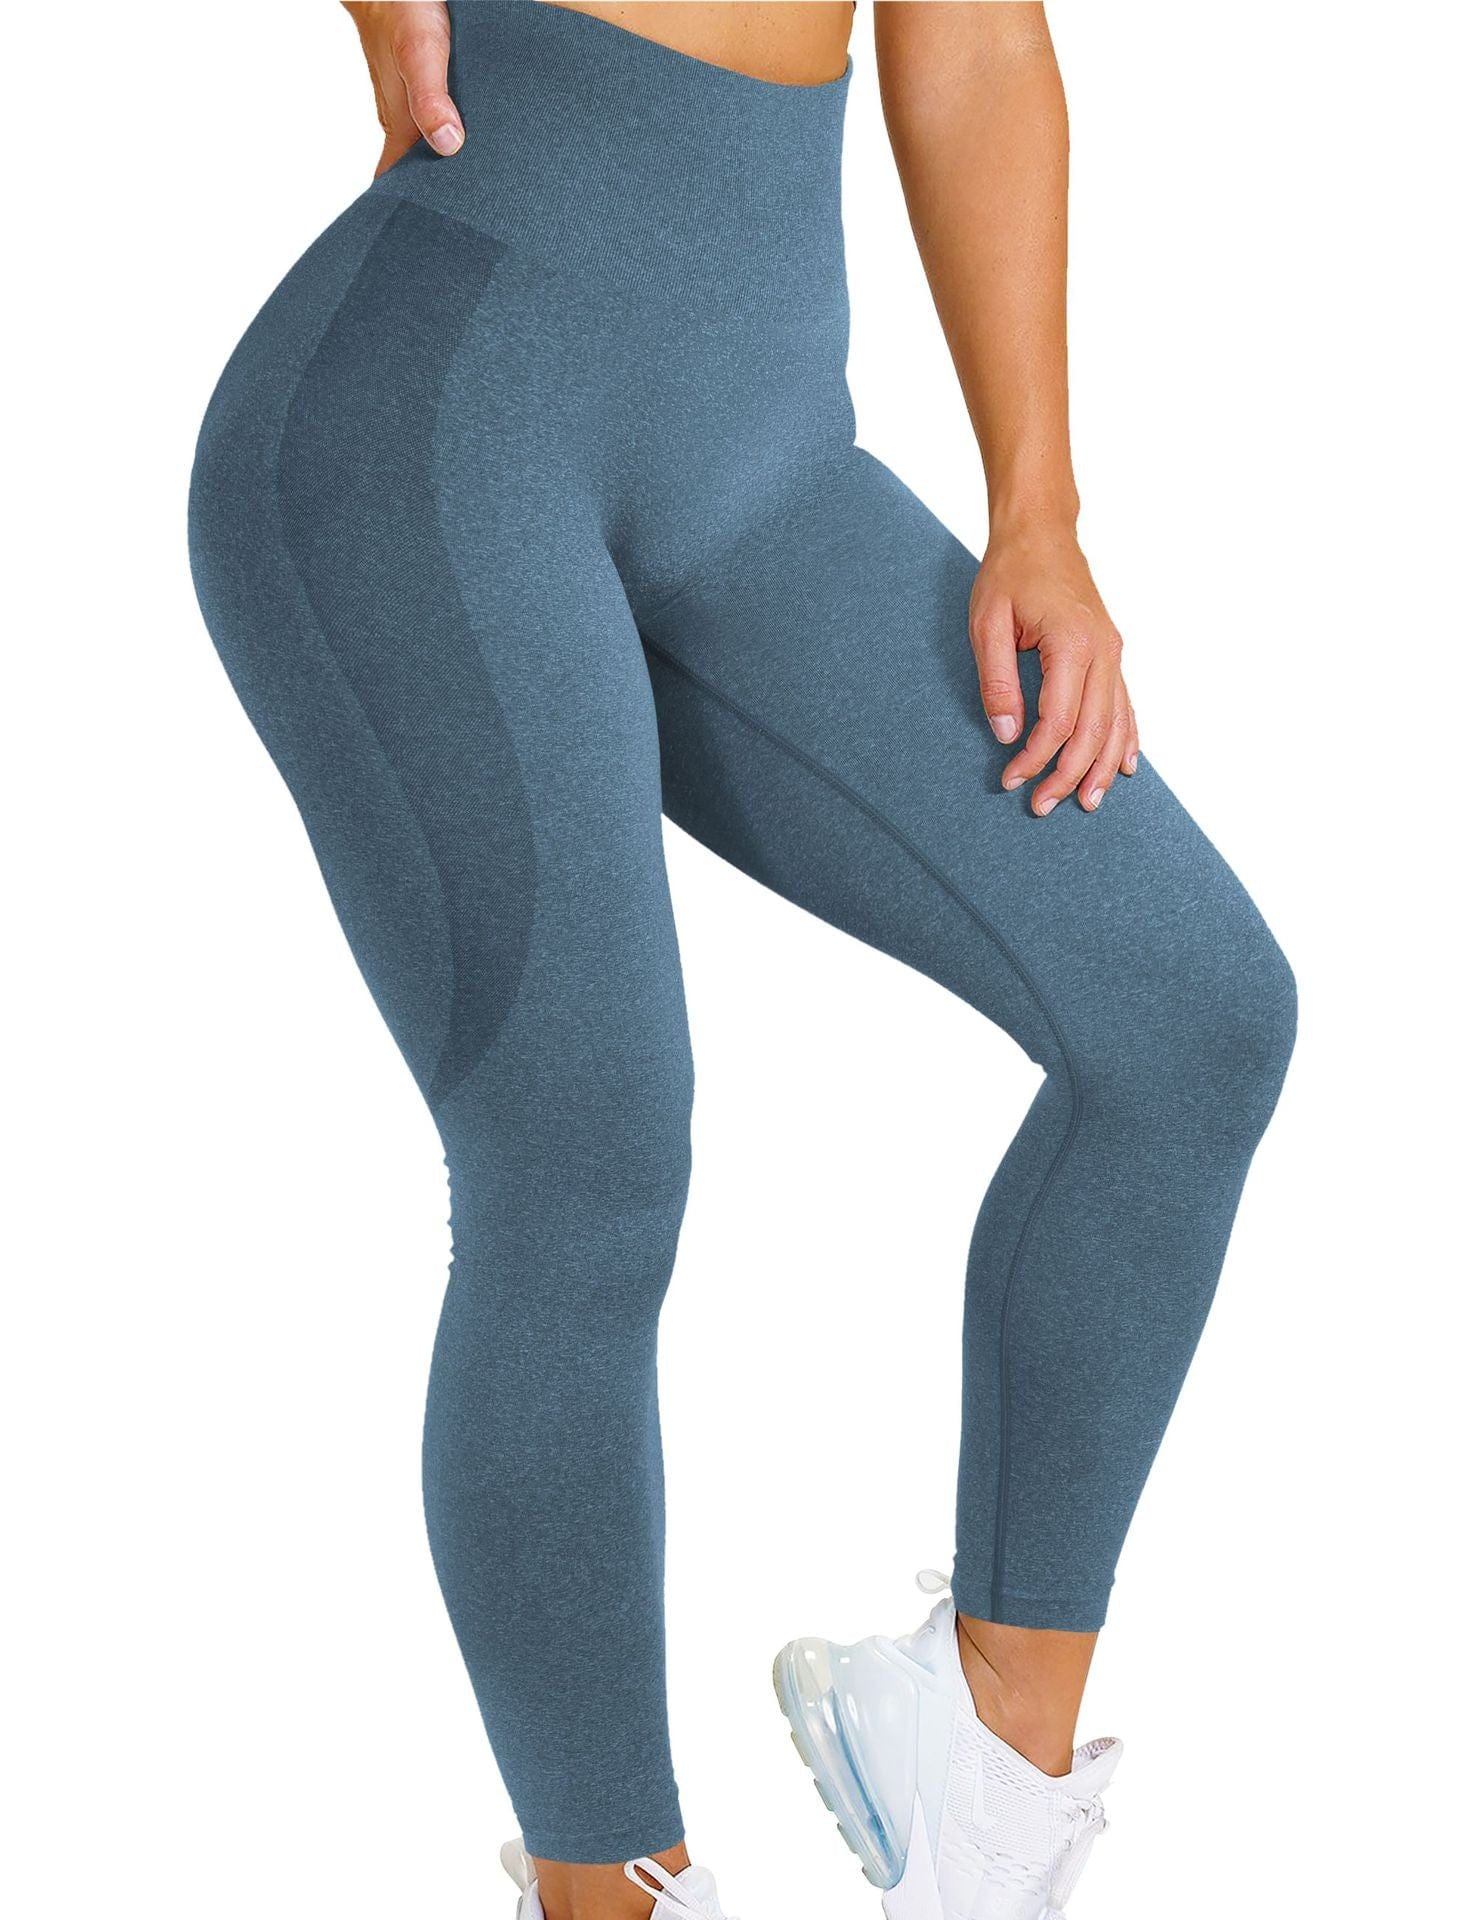 Women Hot Style Snowflake Smiley Pants Jacquard Seamless Yoga Pants Fitness Cropped Pants Yoga leggings dsers dark blue / XS